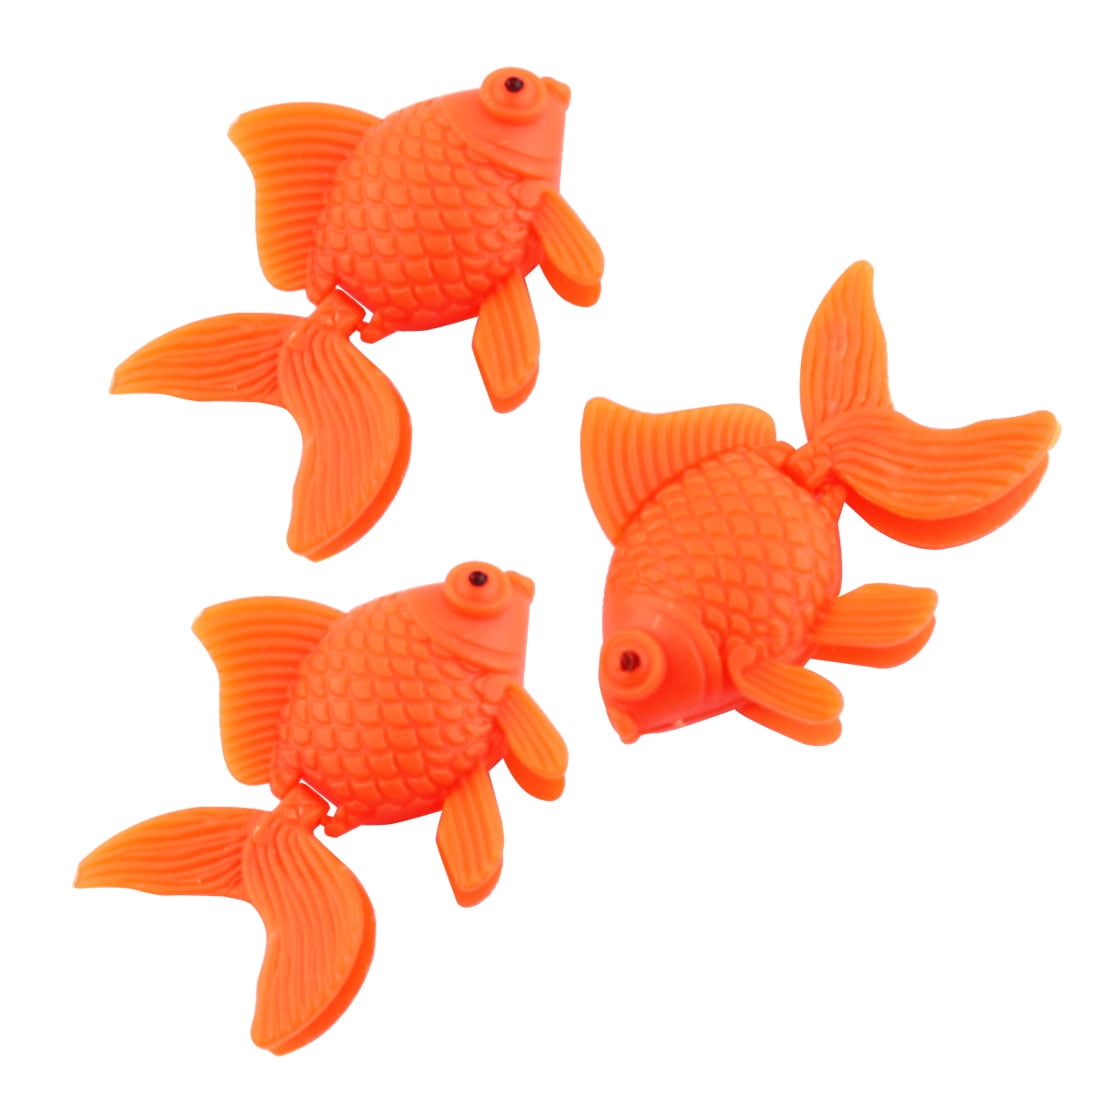 15pcs Ocean Themed Mini Resin Figures Tiny Resin Animal Models for Fish Tank